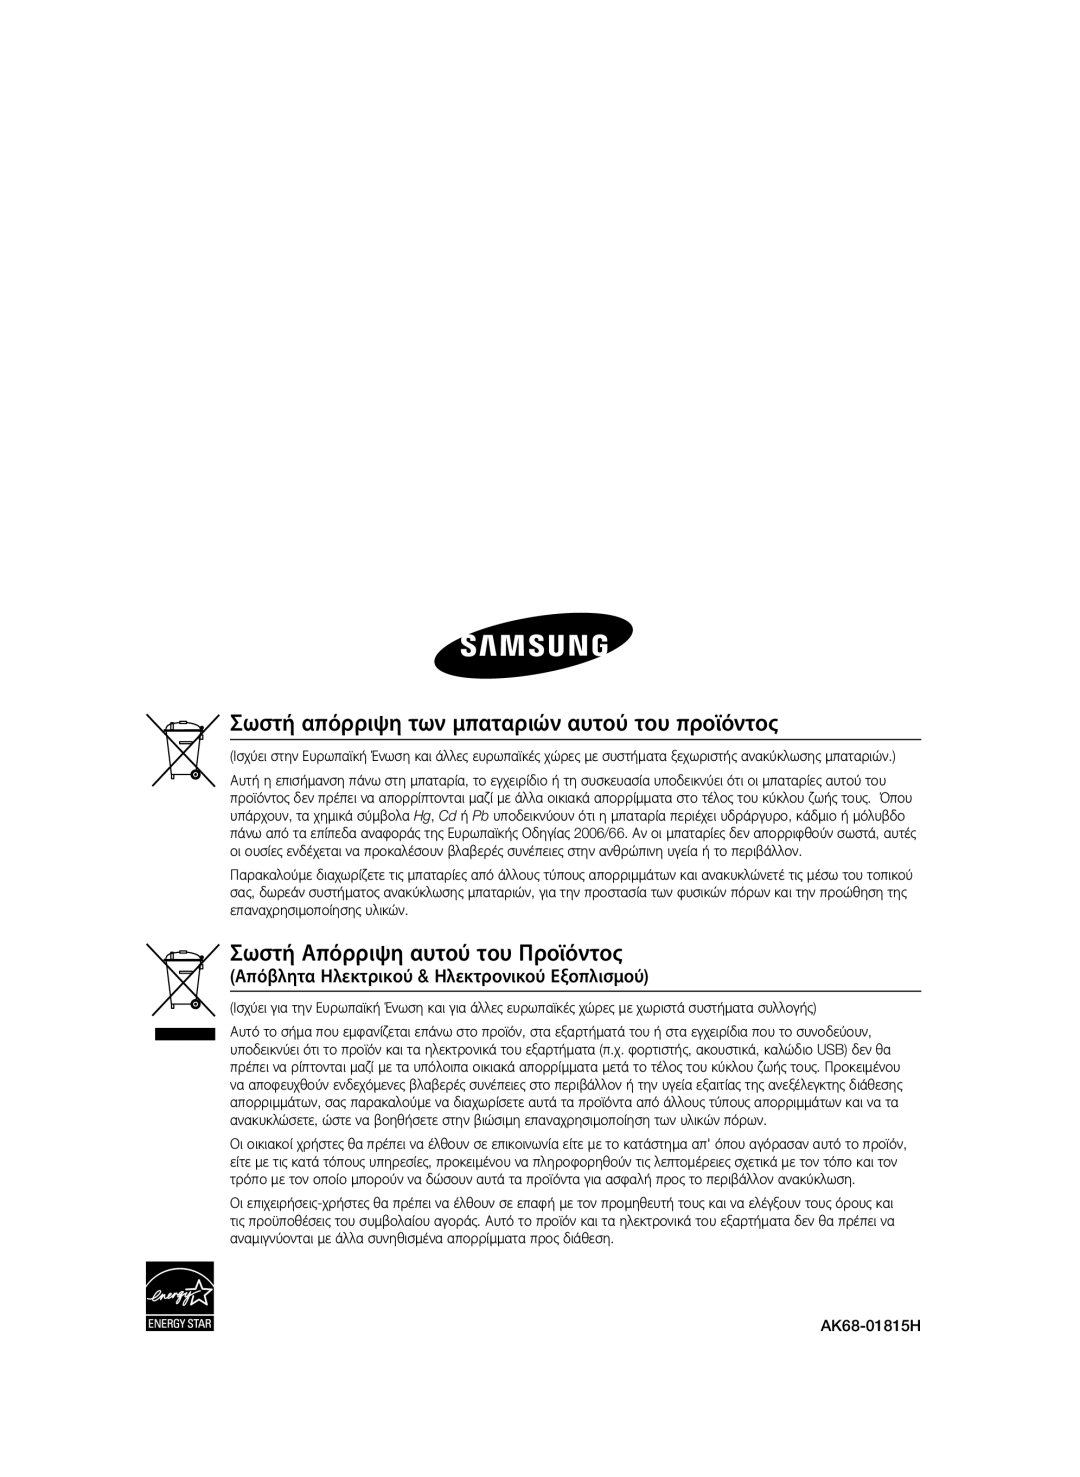 Samsung BD-P1580/EDC manual Σωστή απόρριψη των μπαταριών αυτού του προϊόντος, Σωστή Απόρριψη αυτού του Προϊόντος 